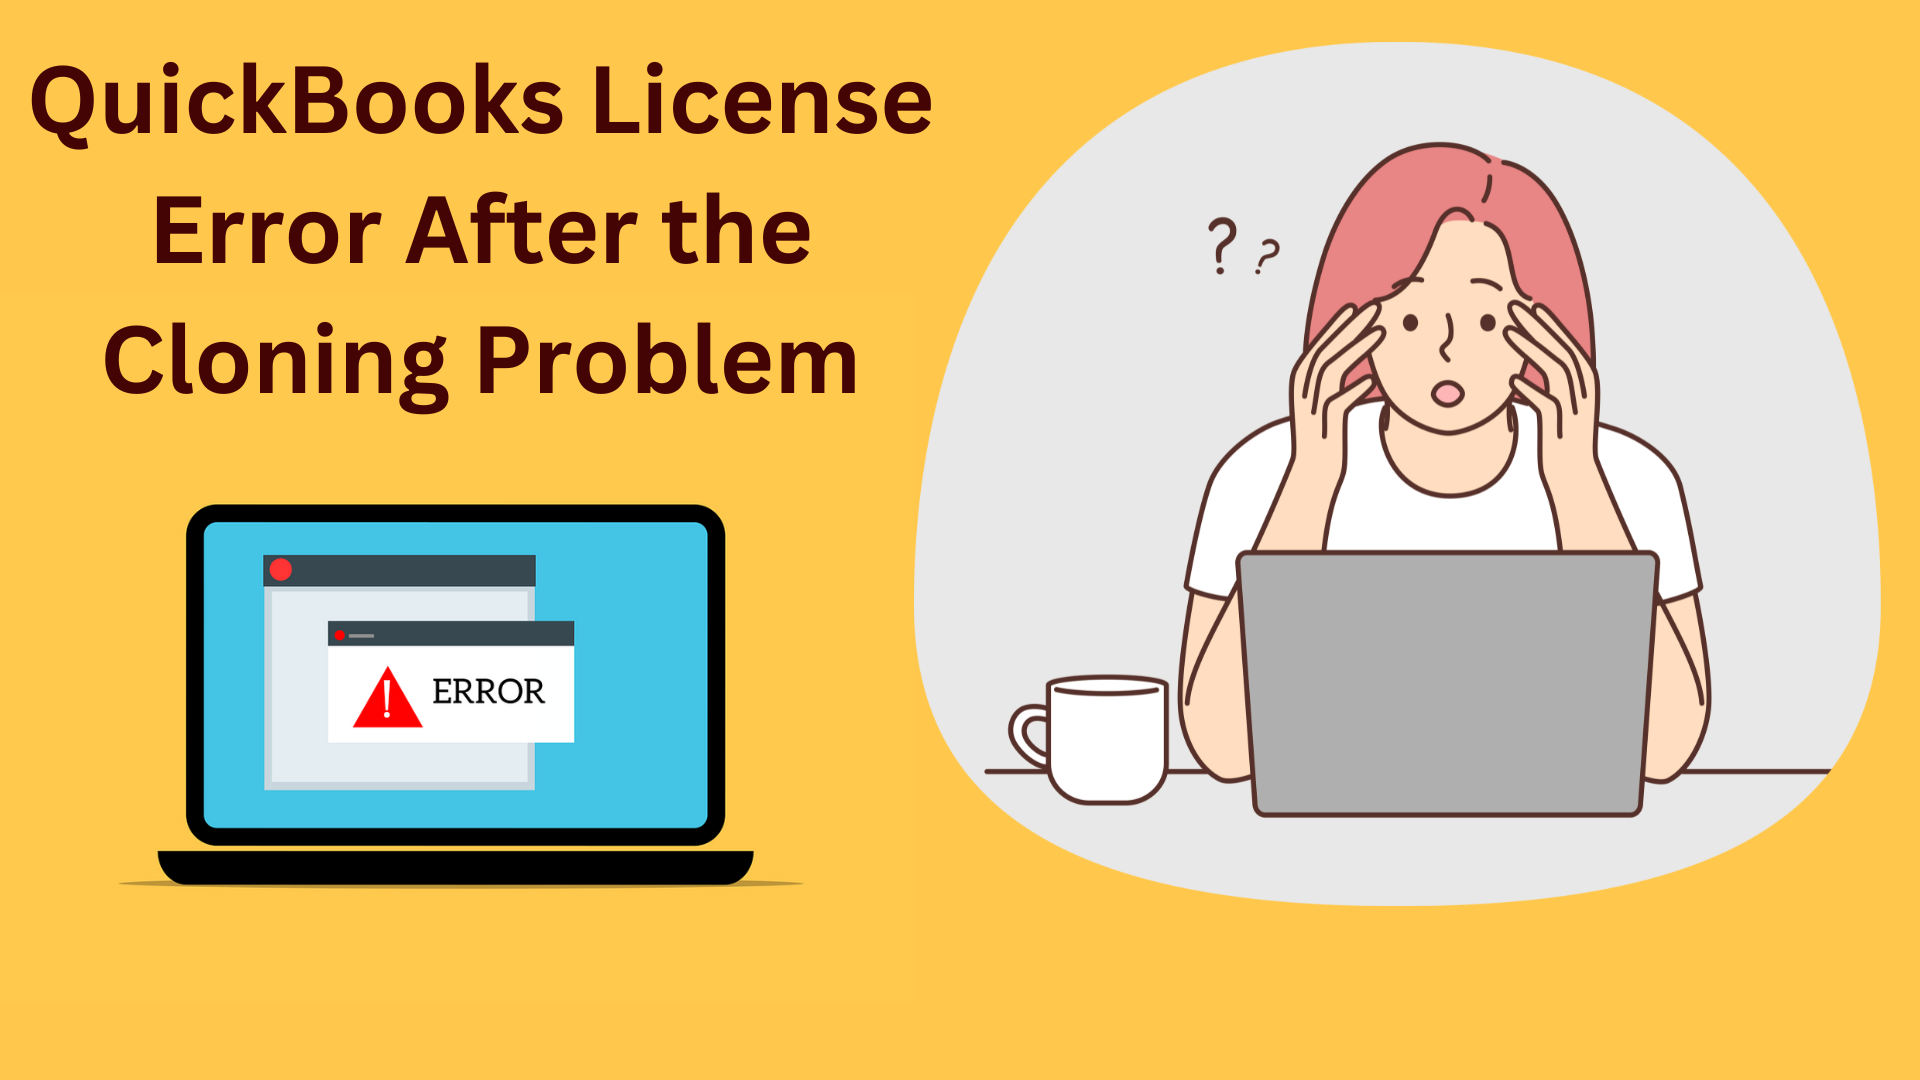 QuickBooks License Error After the Cloning Problem